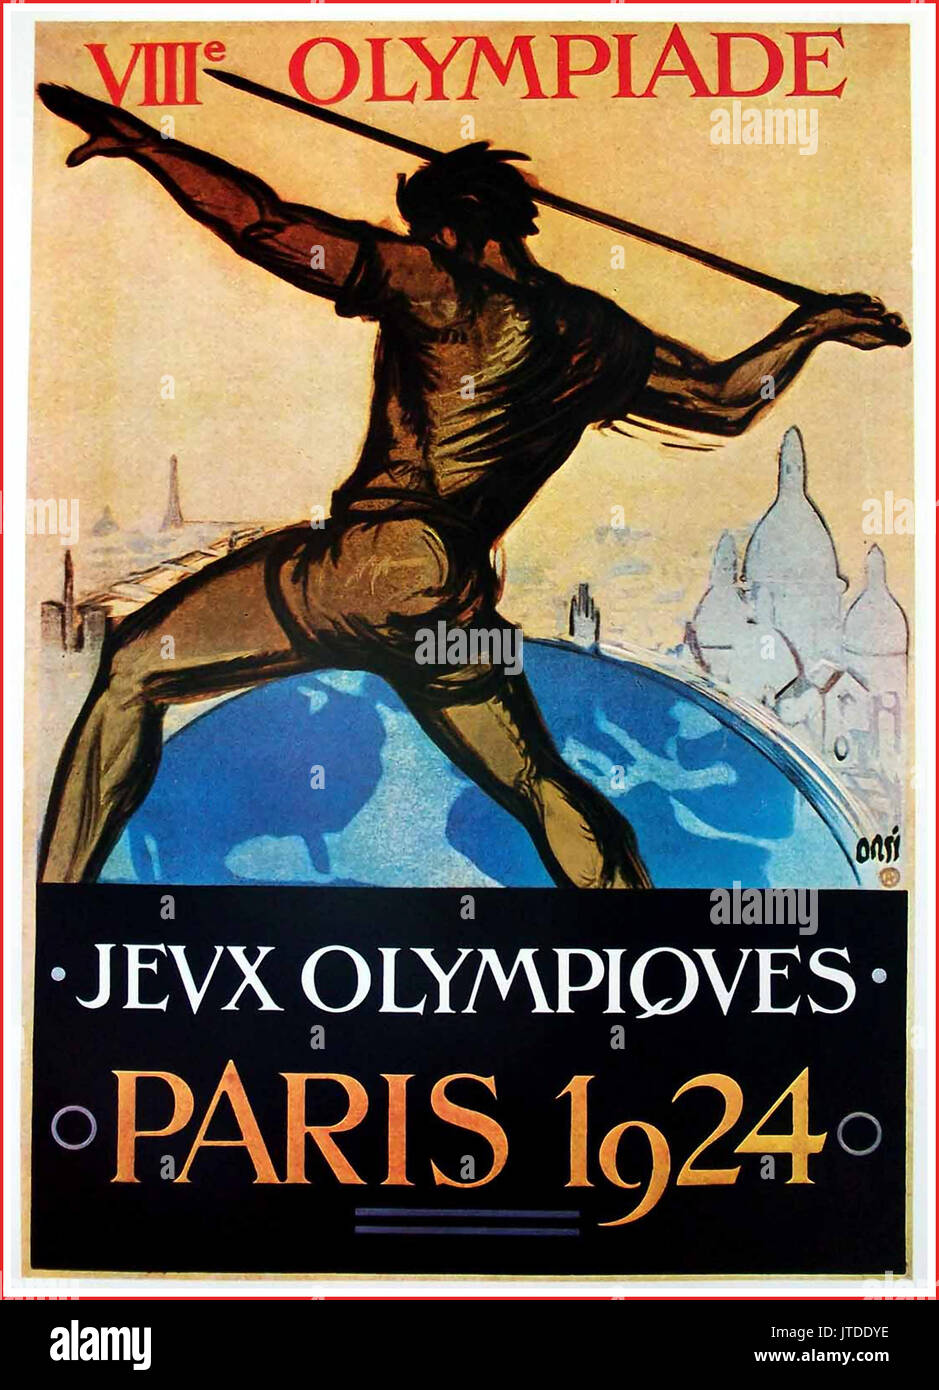 Paris Olympics vintage 1924 Olympiade Poster 1924 Paris France Stock Photo